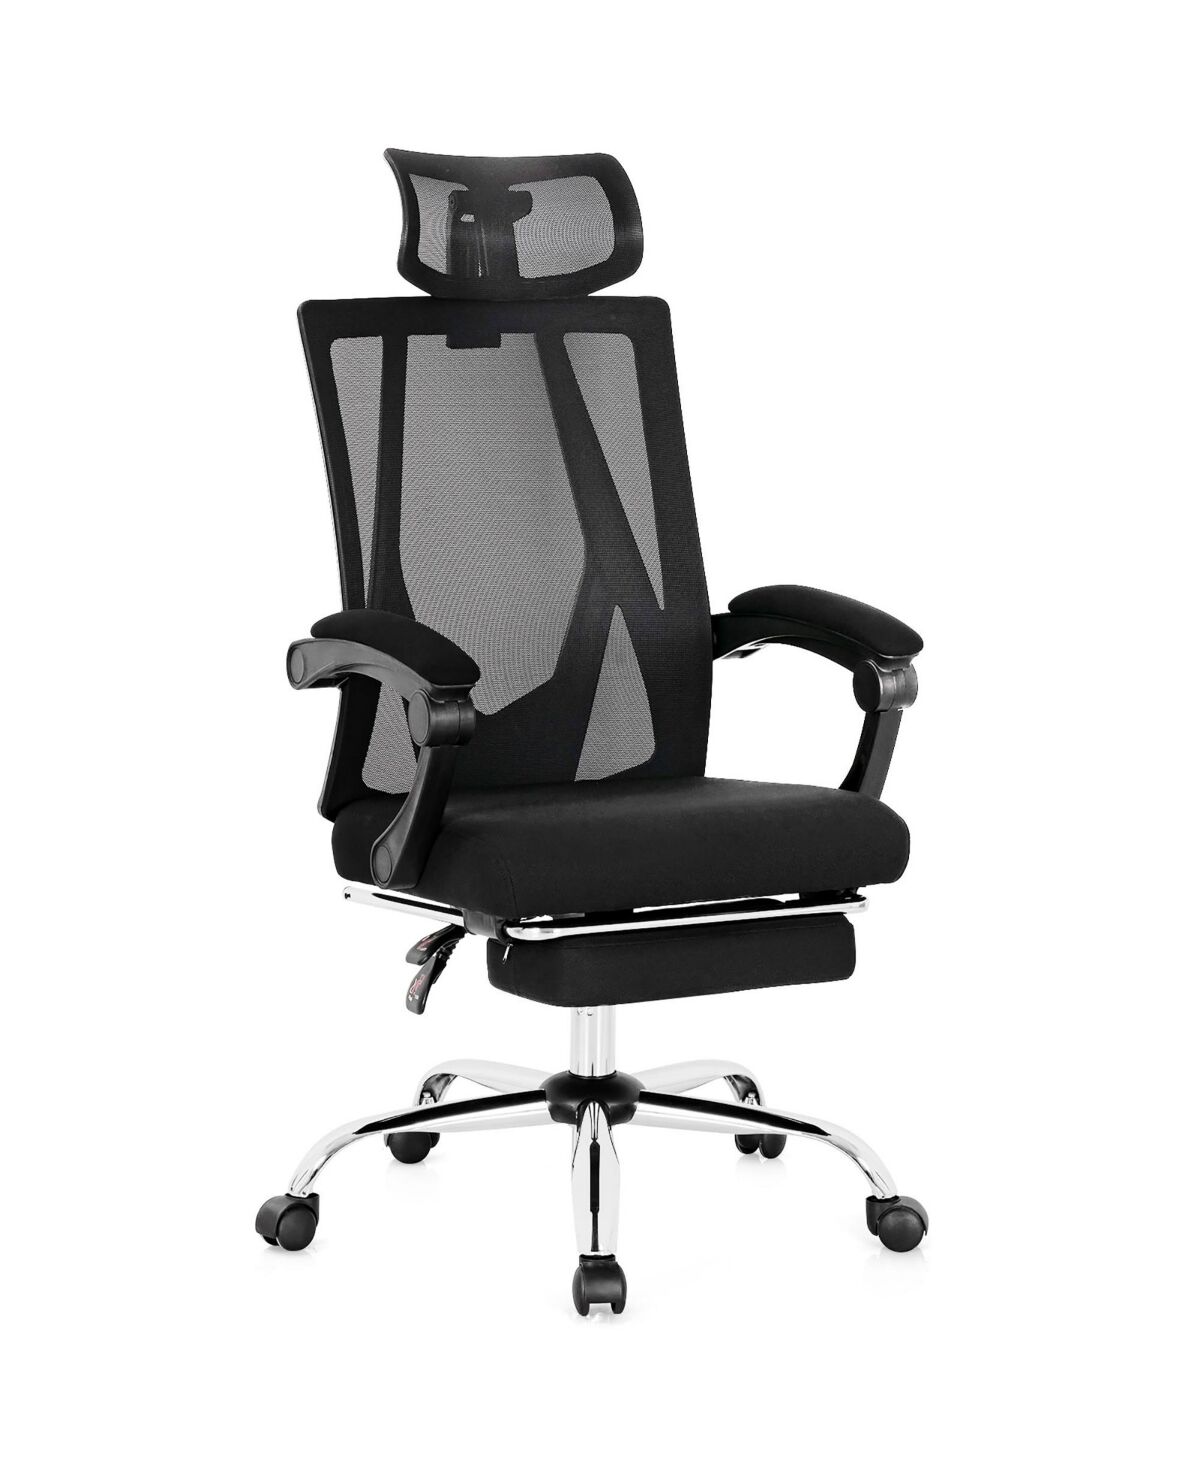 Costway Mesh Office Chair Recliner Desk Chair Height Adjustable - Black